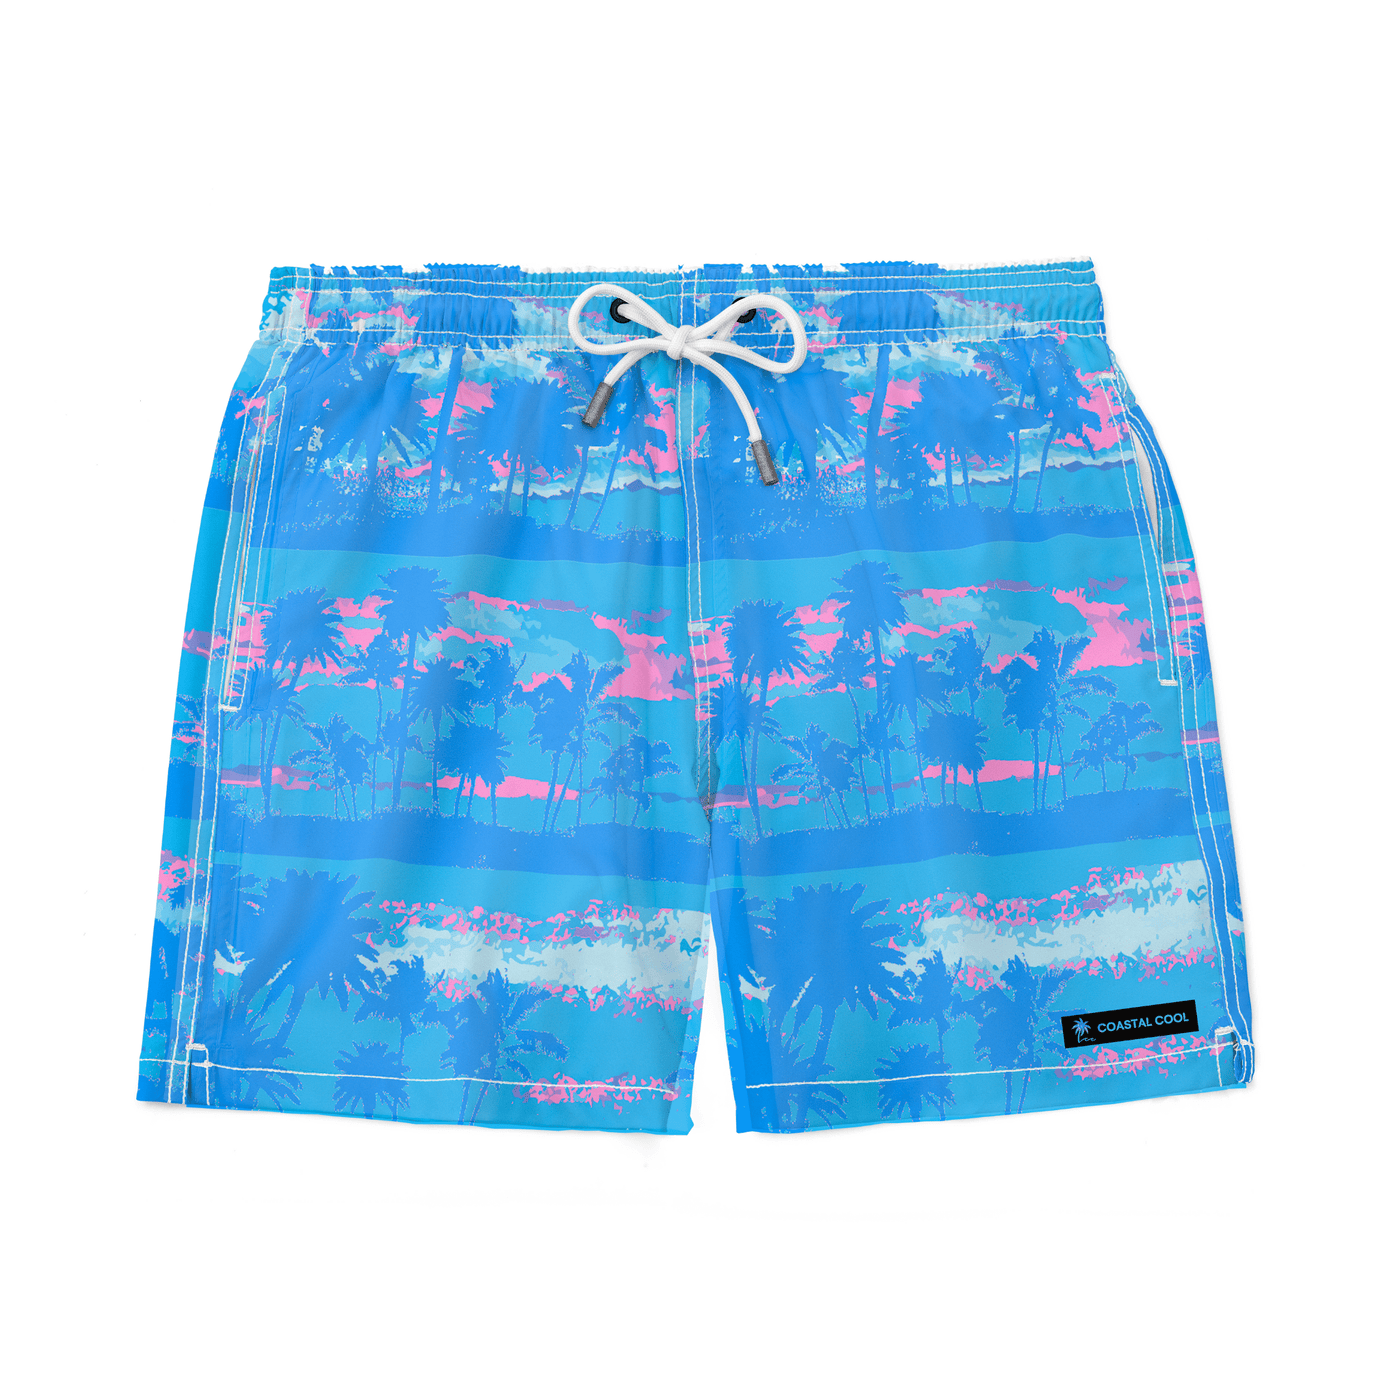 Island Stripes Blue Swim trunks - Coastal Cool - Swimwear and Beachwear - Recycled fabrics